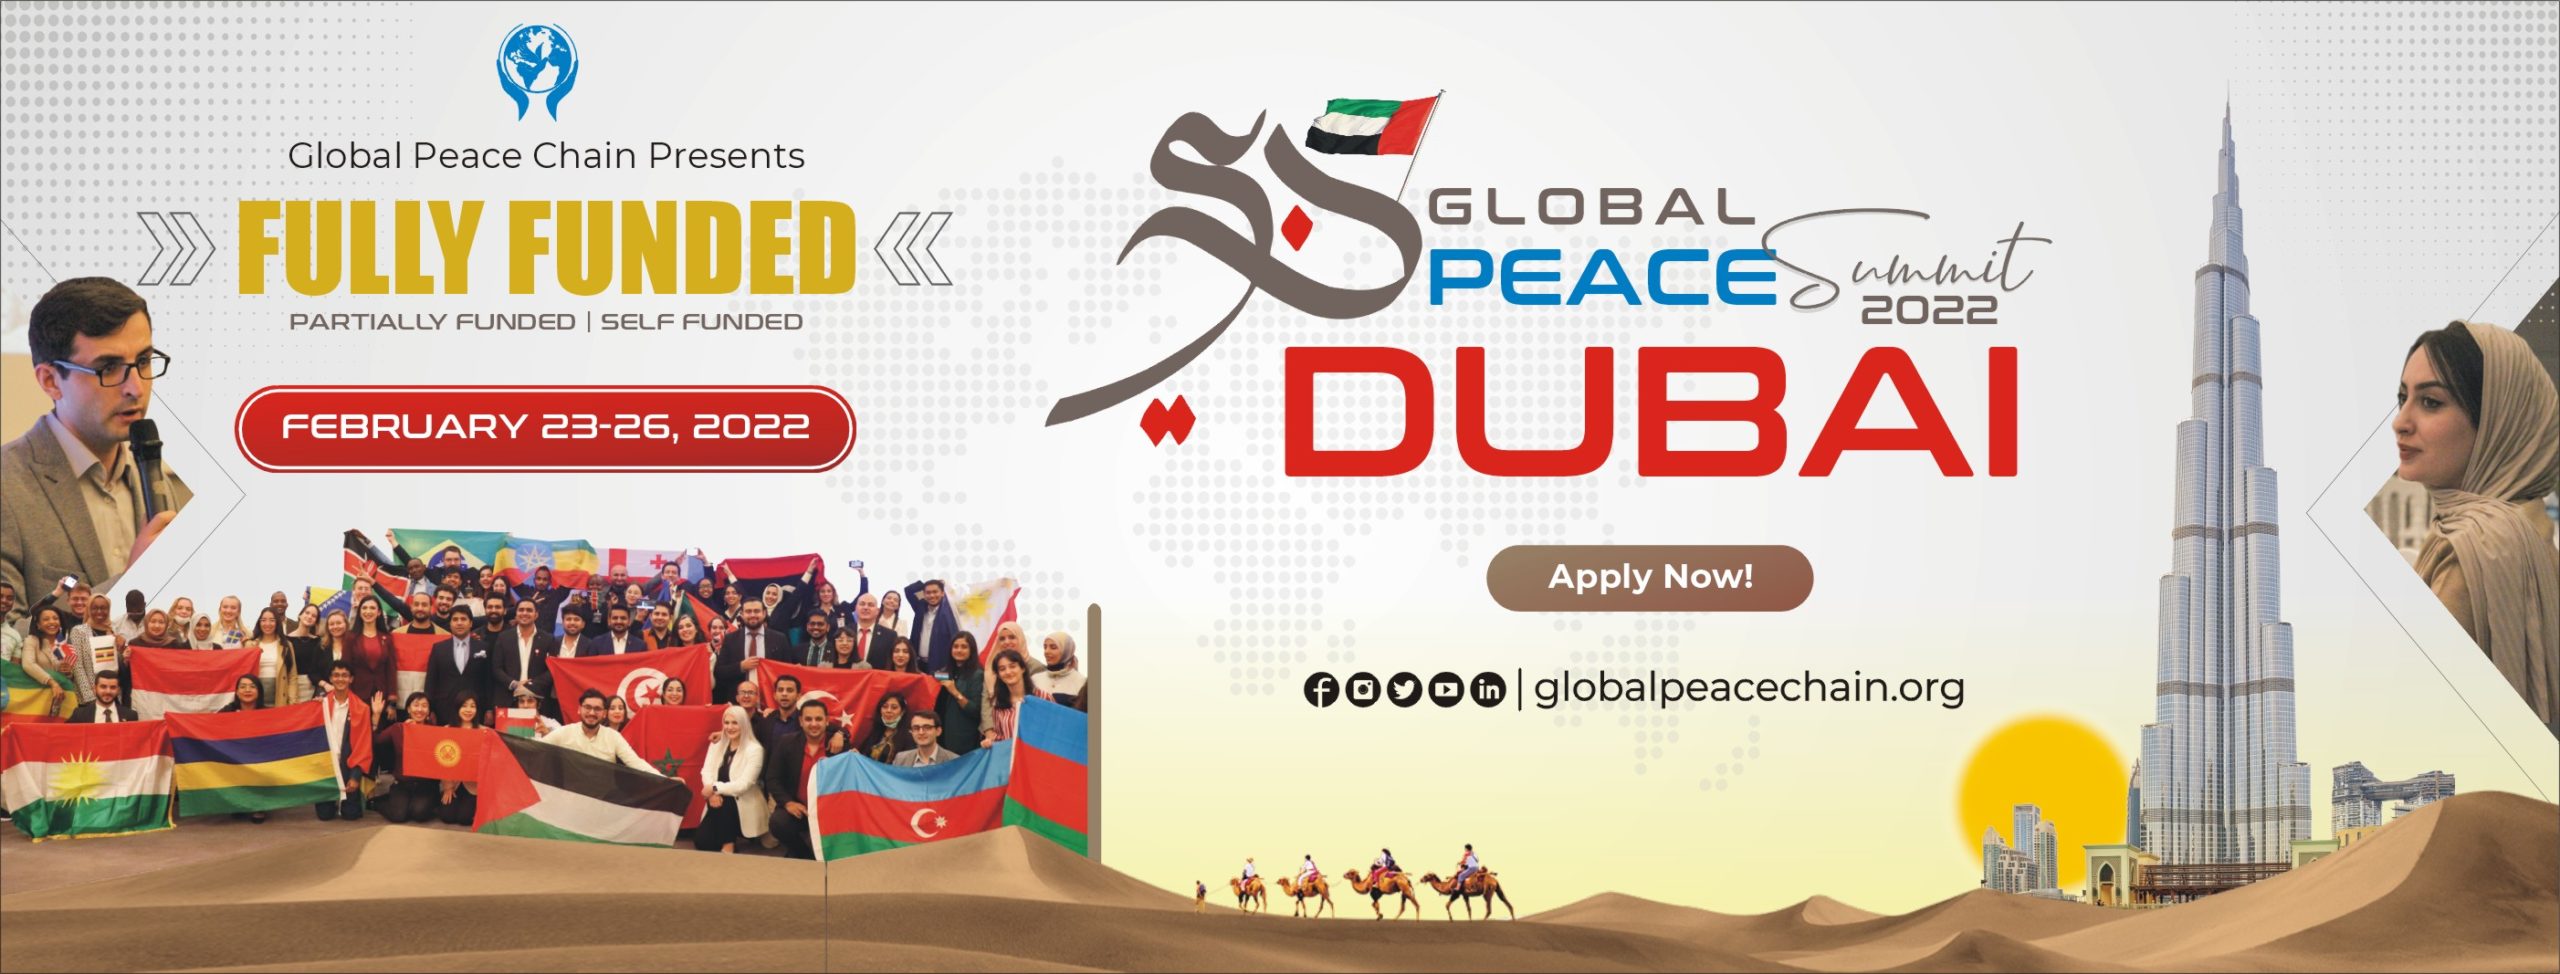 Global Peace Summit Dubai 2022 | Fully Funded Conference in Dubai